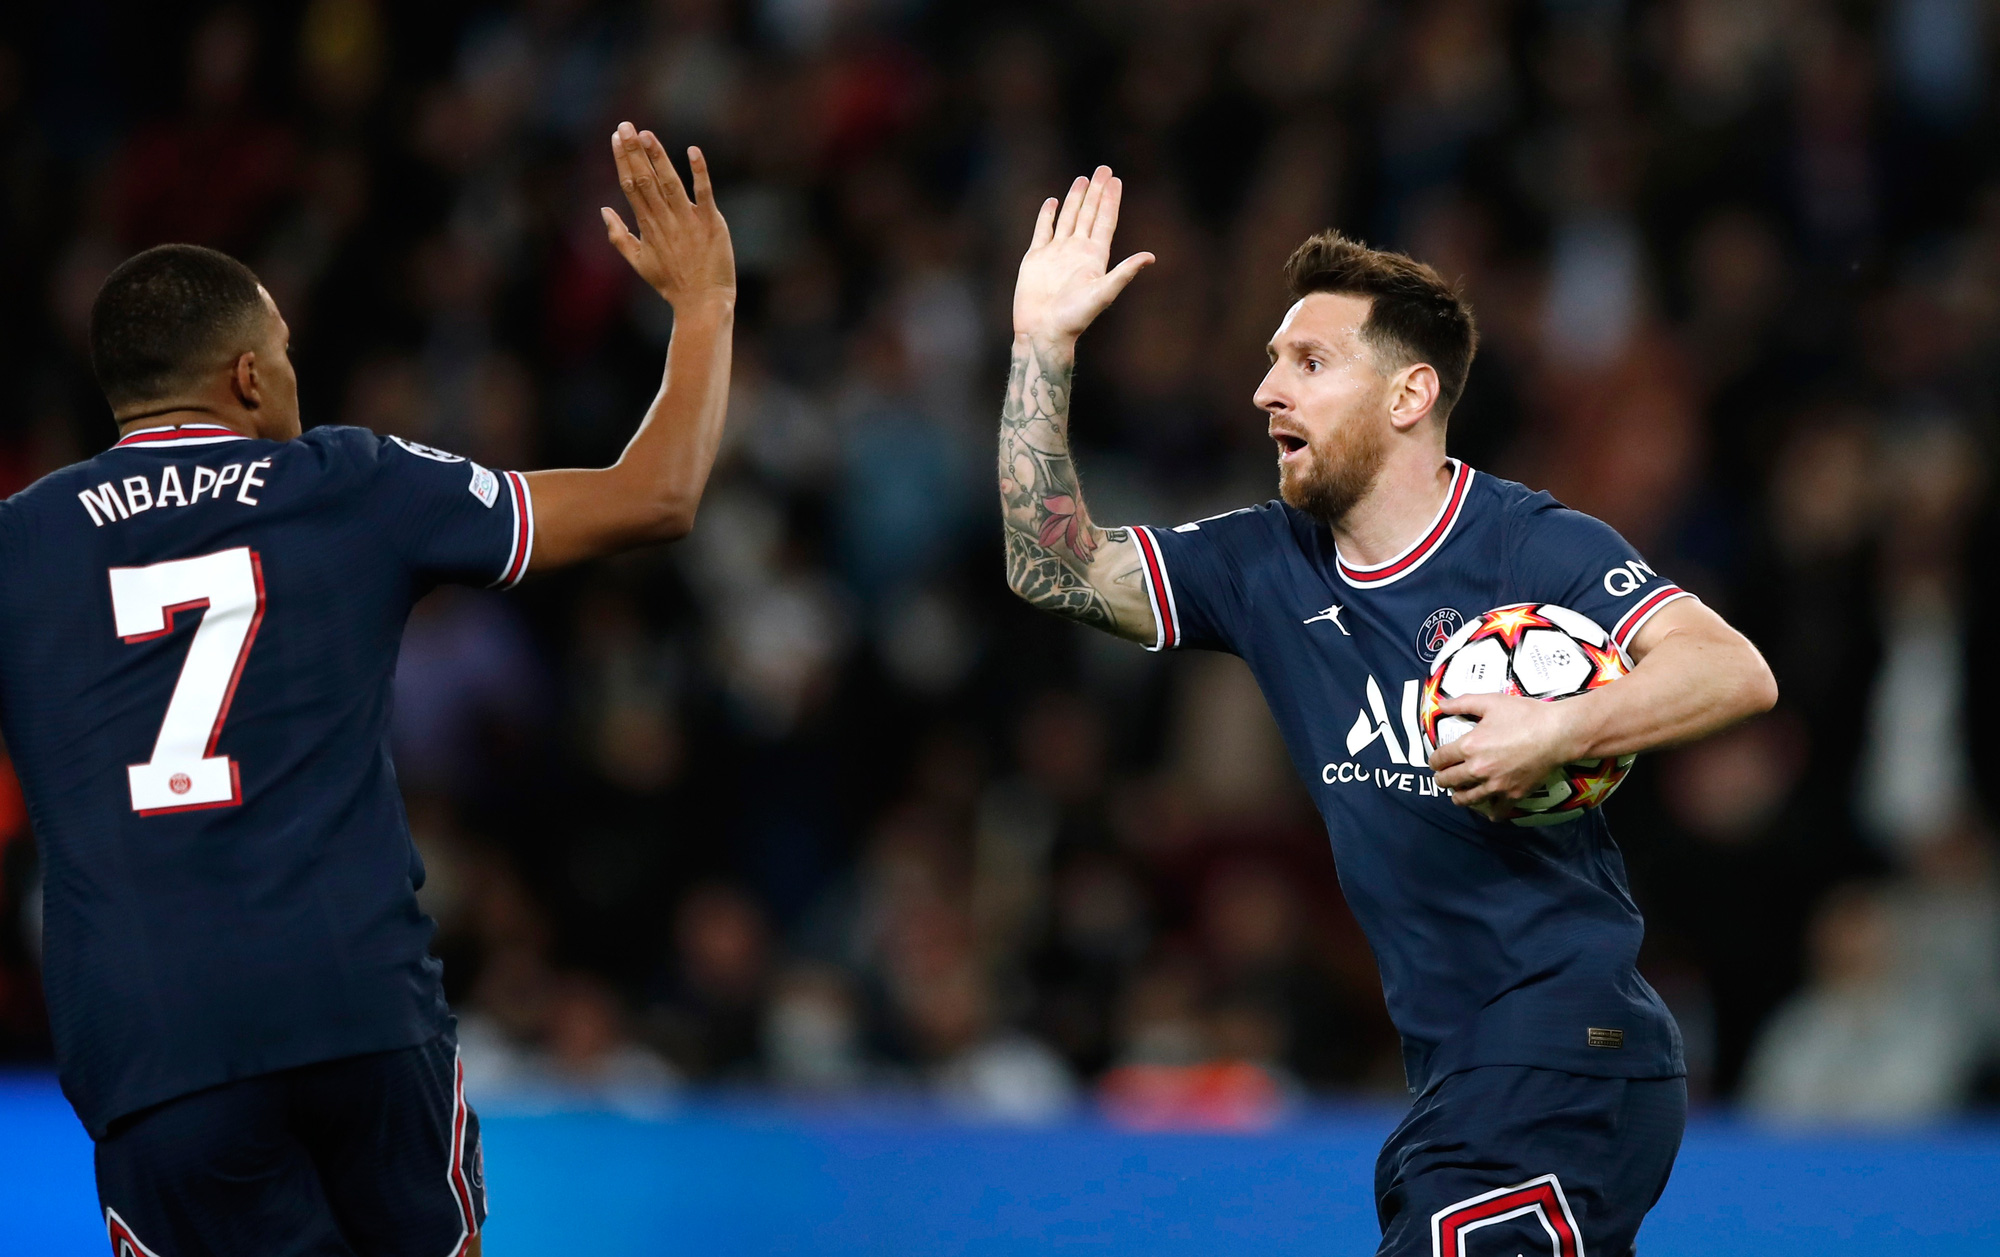 (Vòng 34 Ligue 1) Olympique Lyonnais - Montpellier Hérault Sport Club: Tin tức trước trận, dự đoán trận đấu